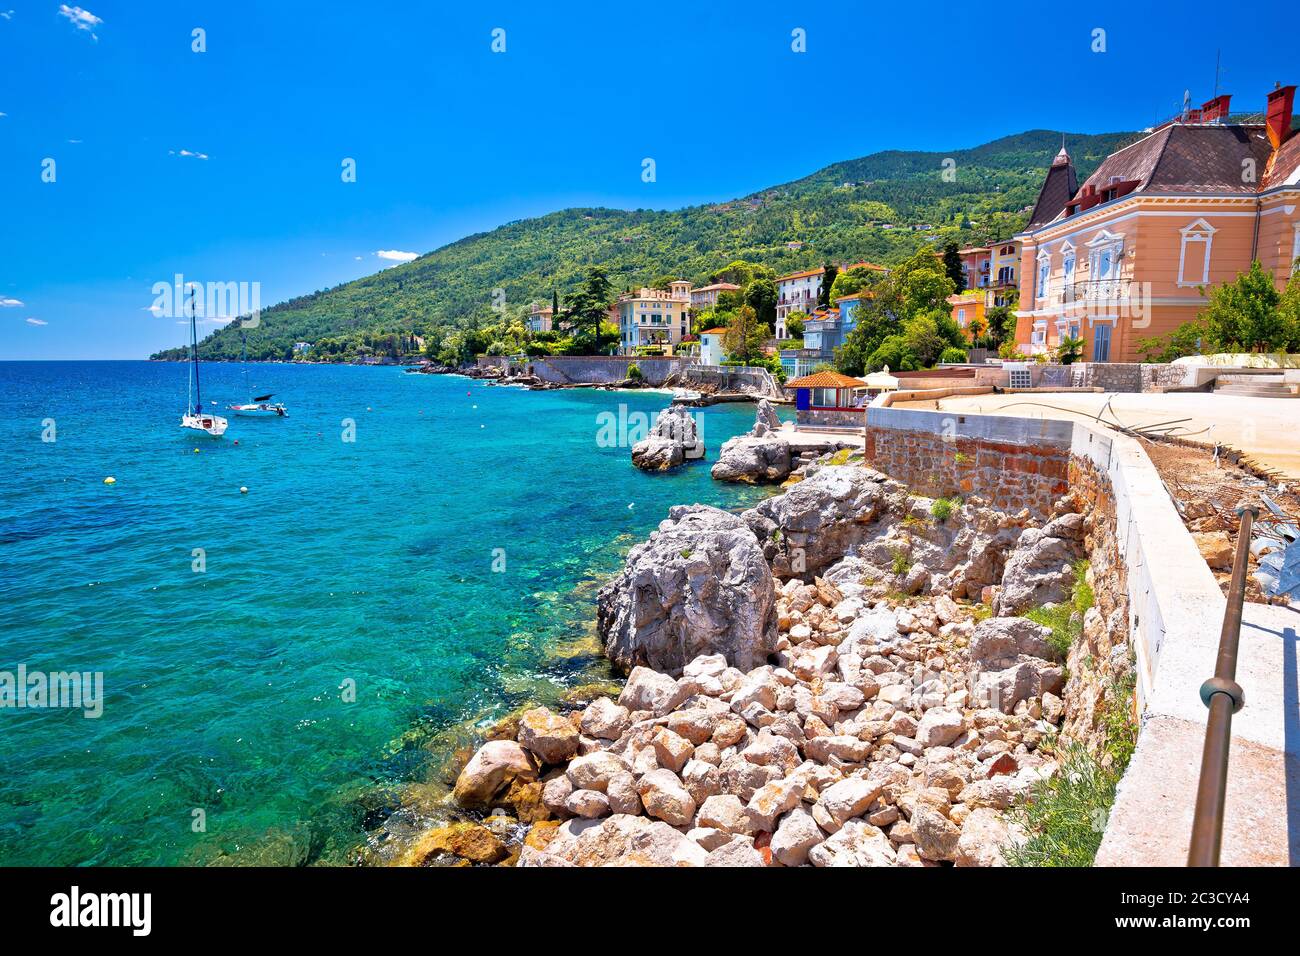 Town of Lovran coastline villas and turquoise sea view, Stock Photo